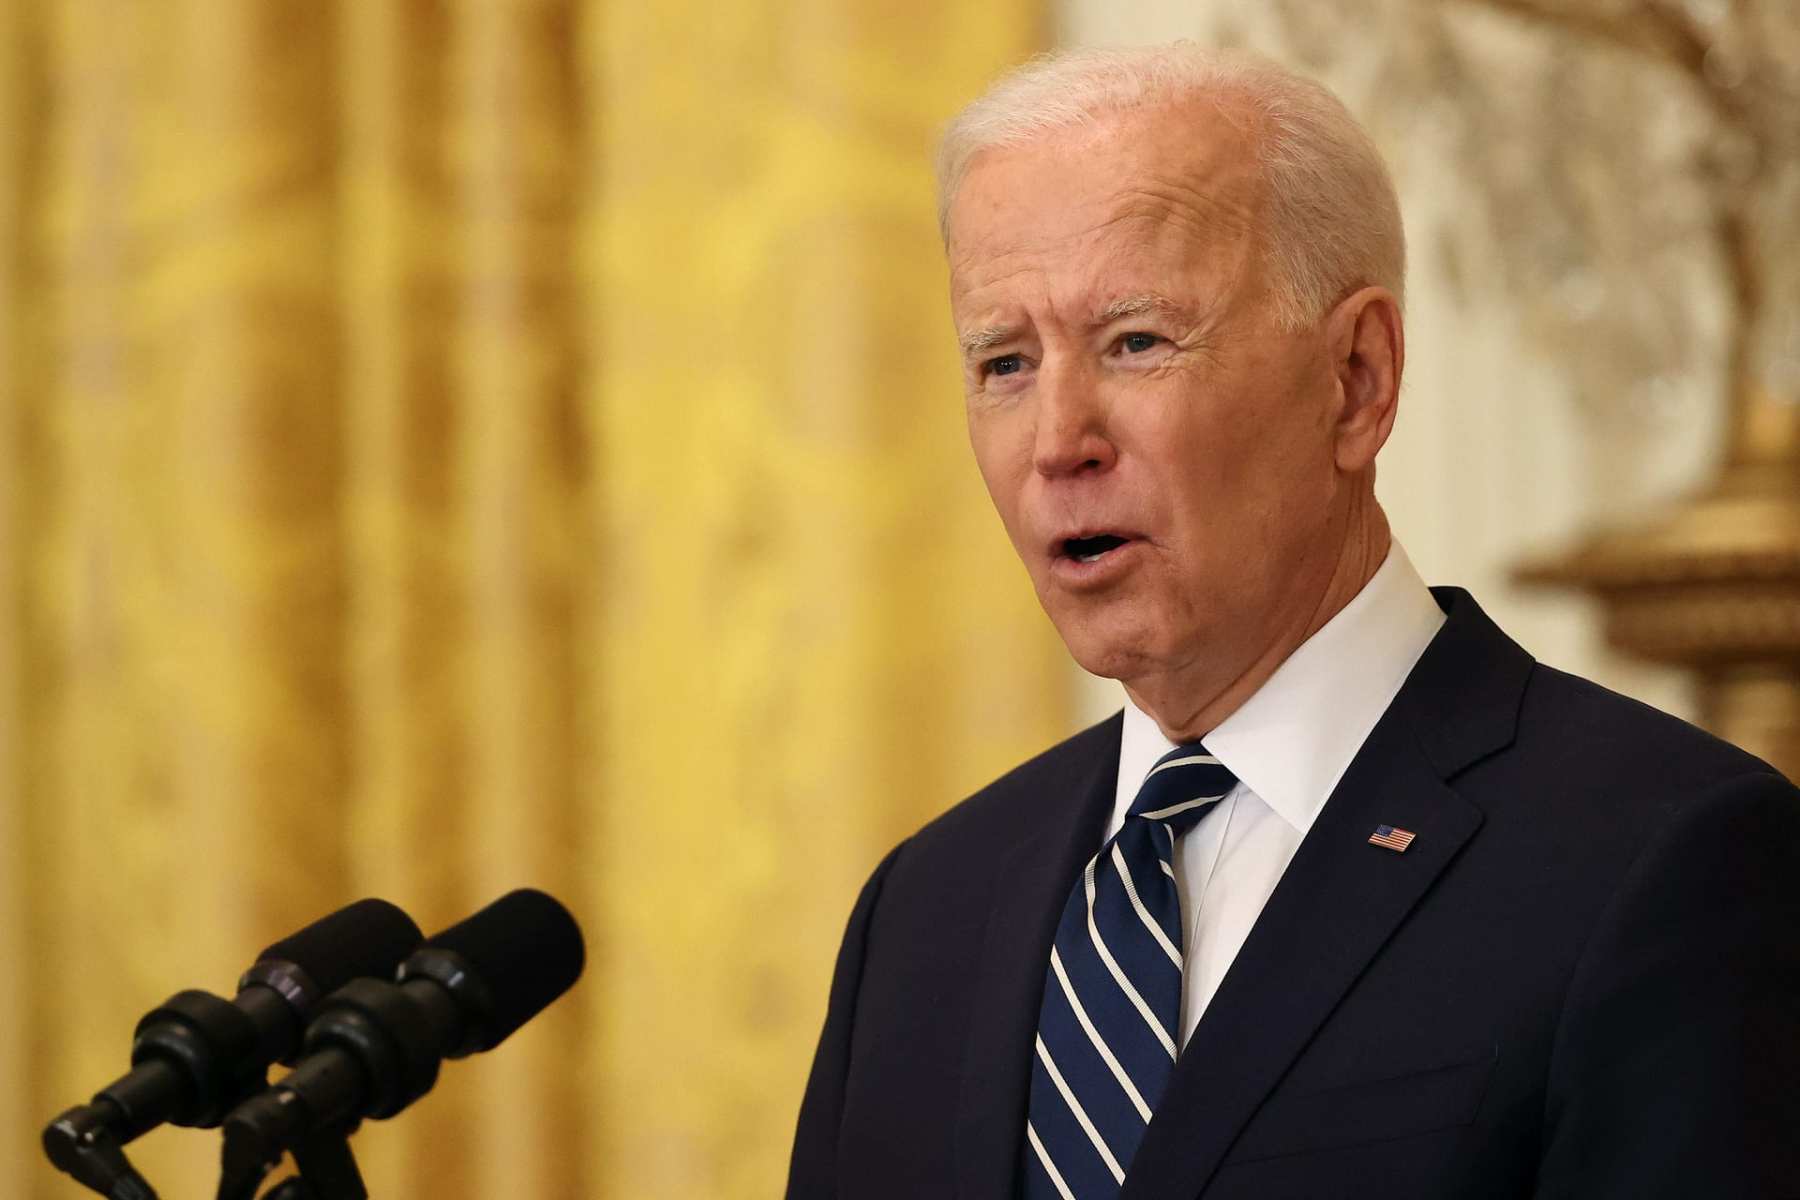 Joe Biden speaking at a dias into a microphone